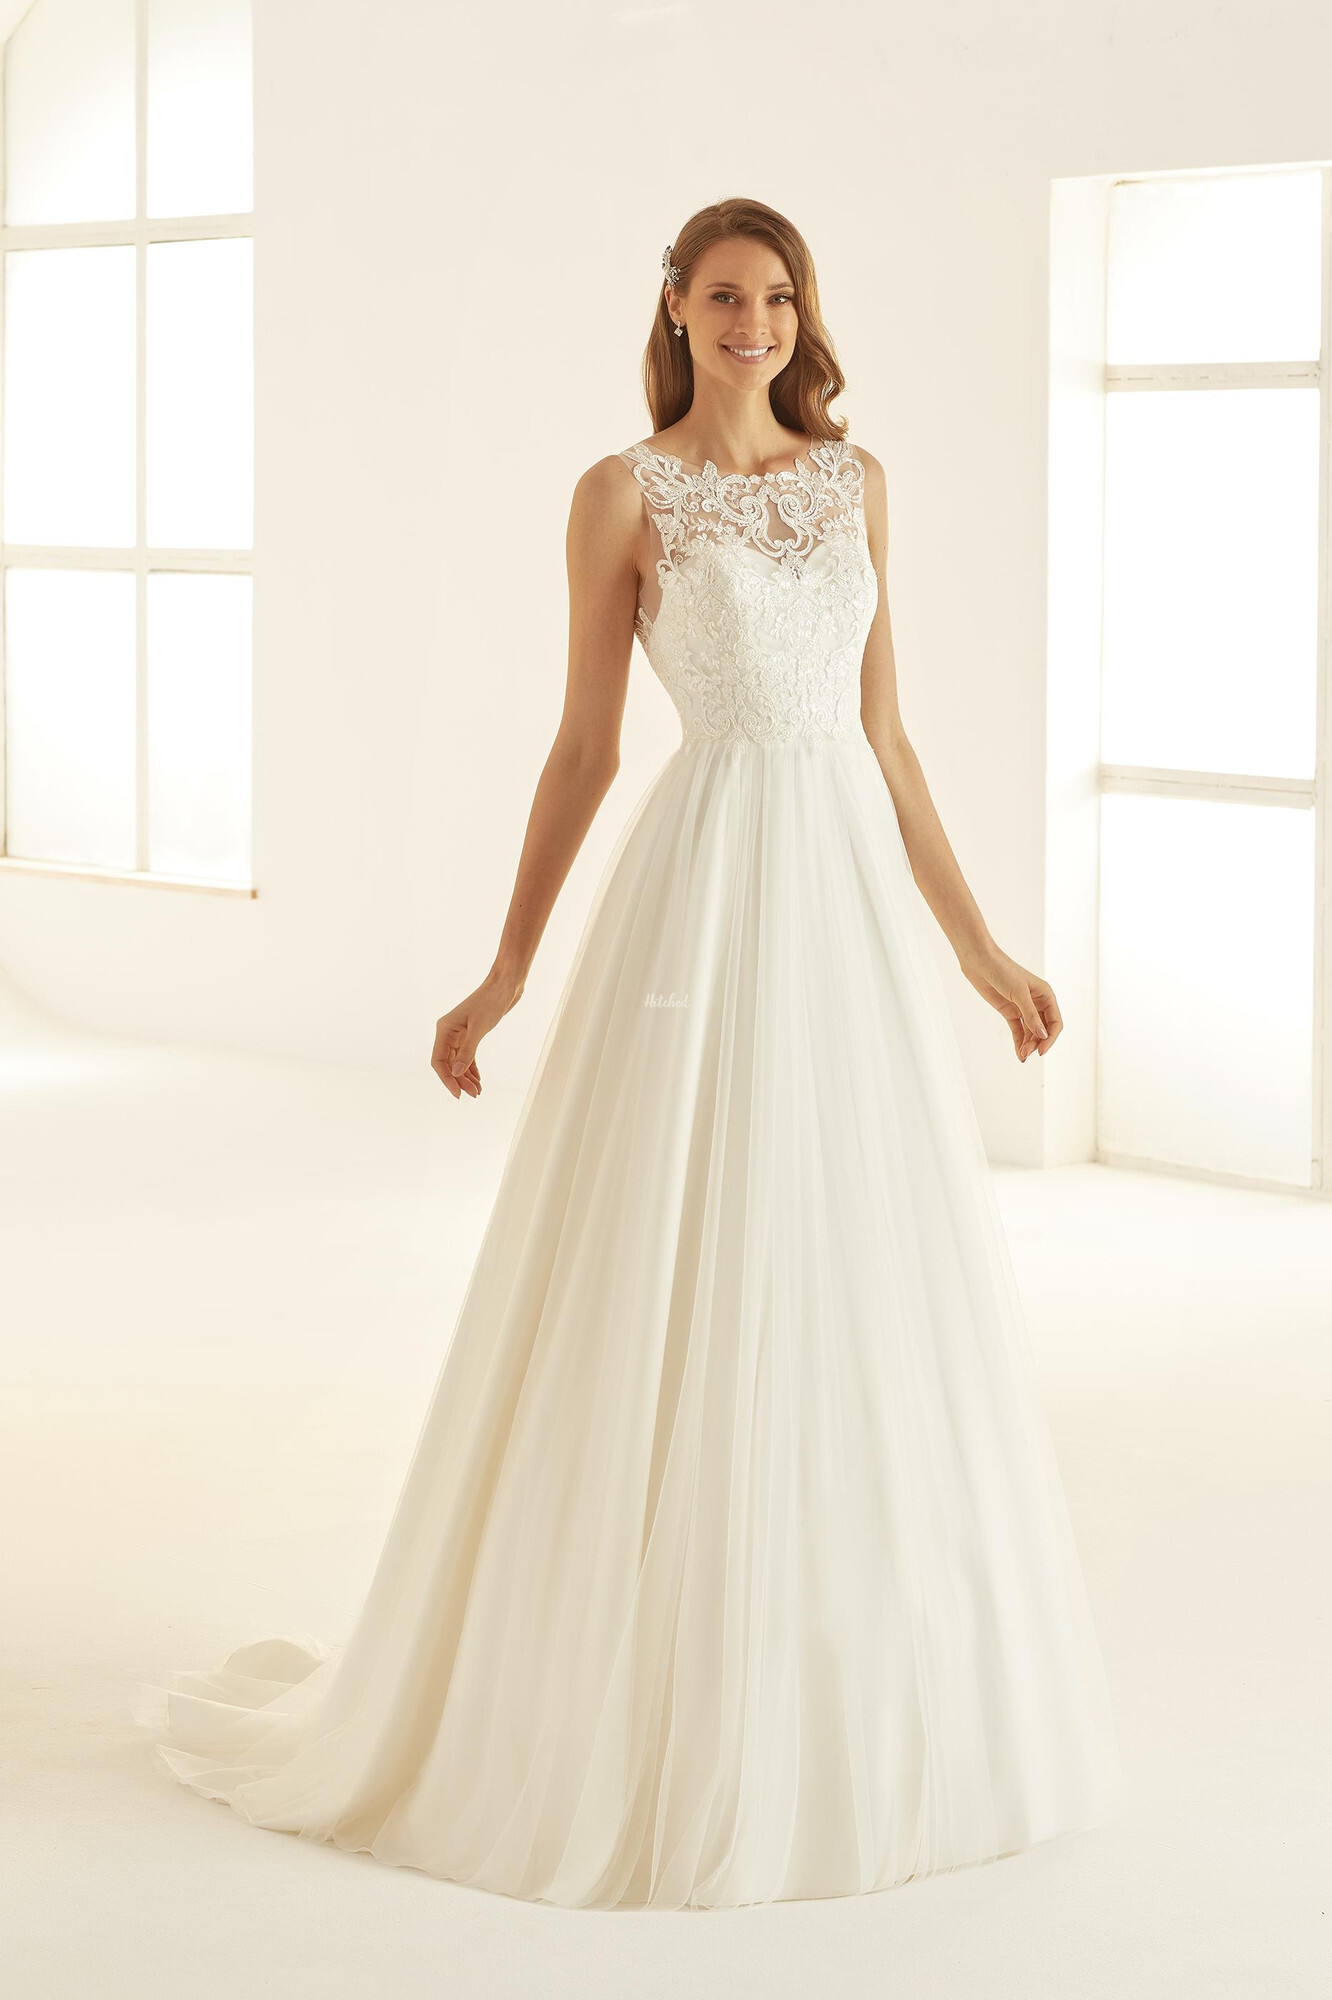 Atessa Wedding Dress from Bianco Evento - hitched.co.uk